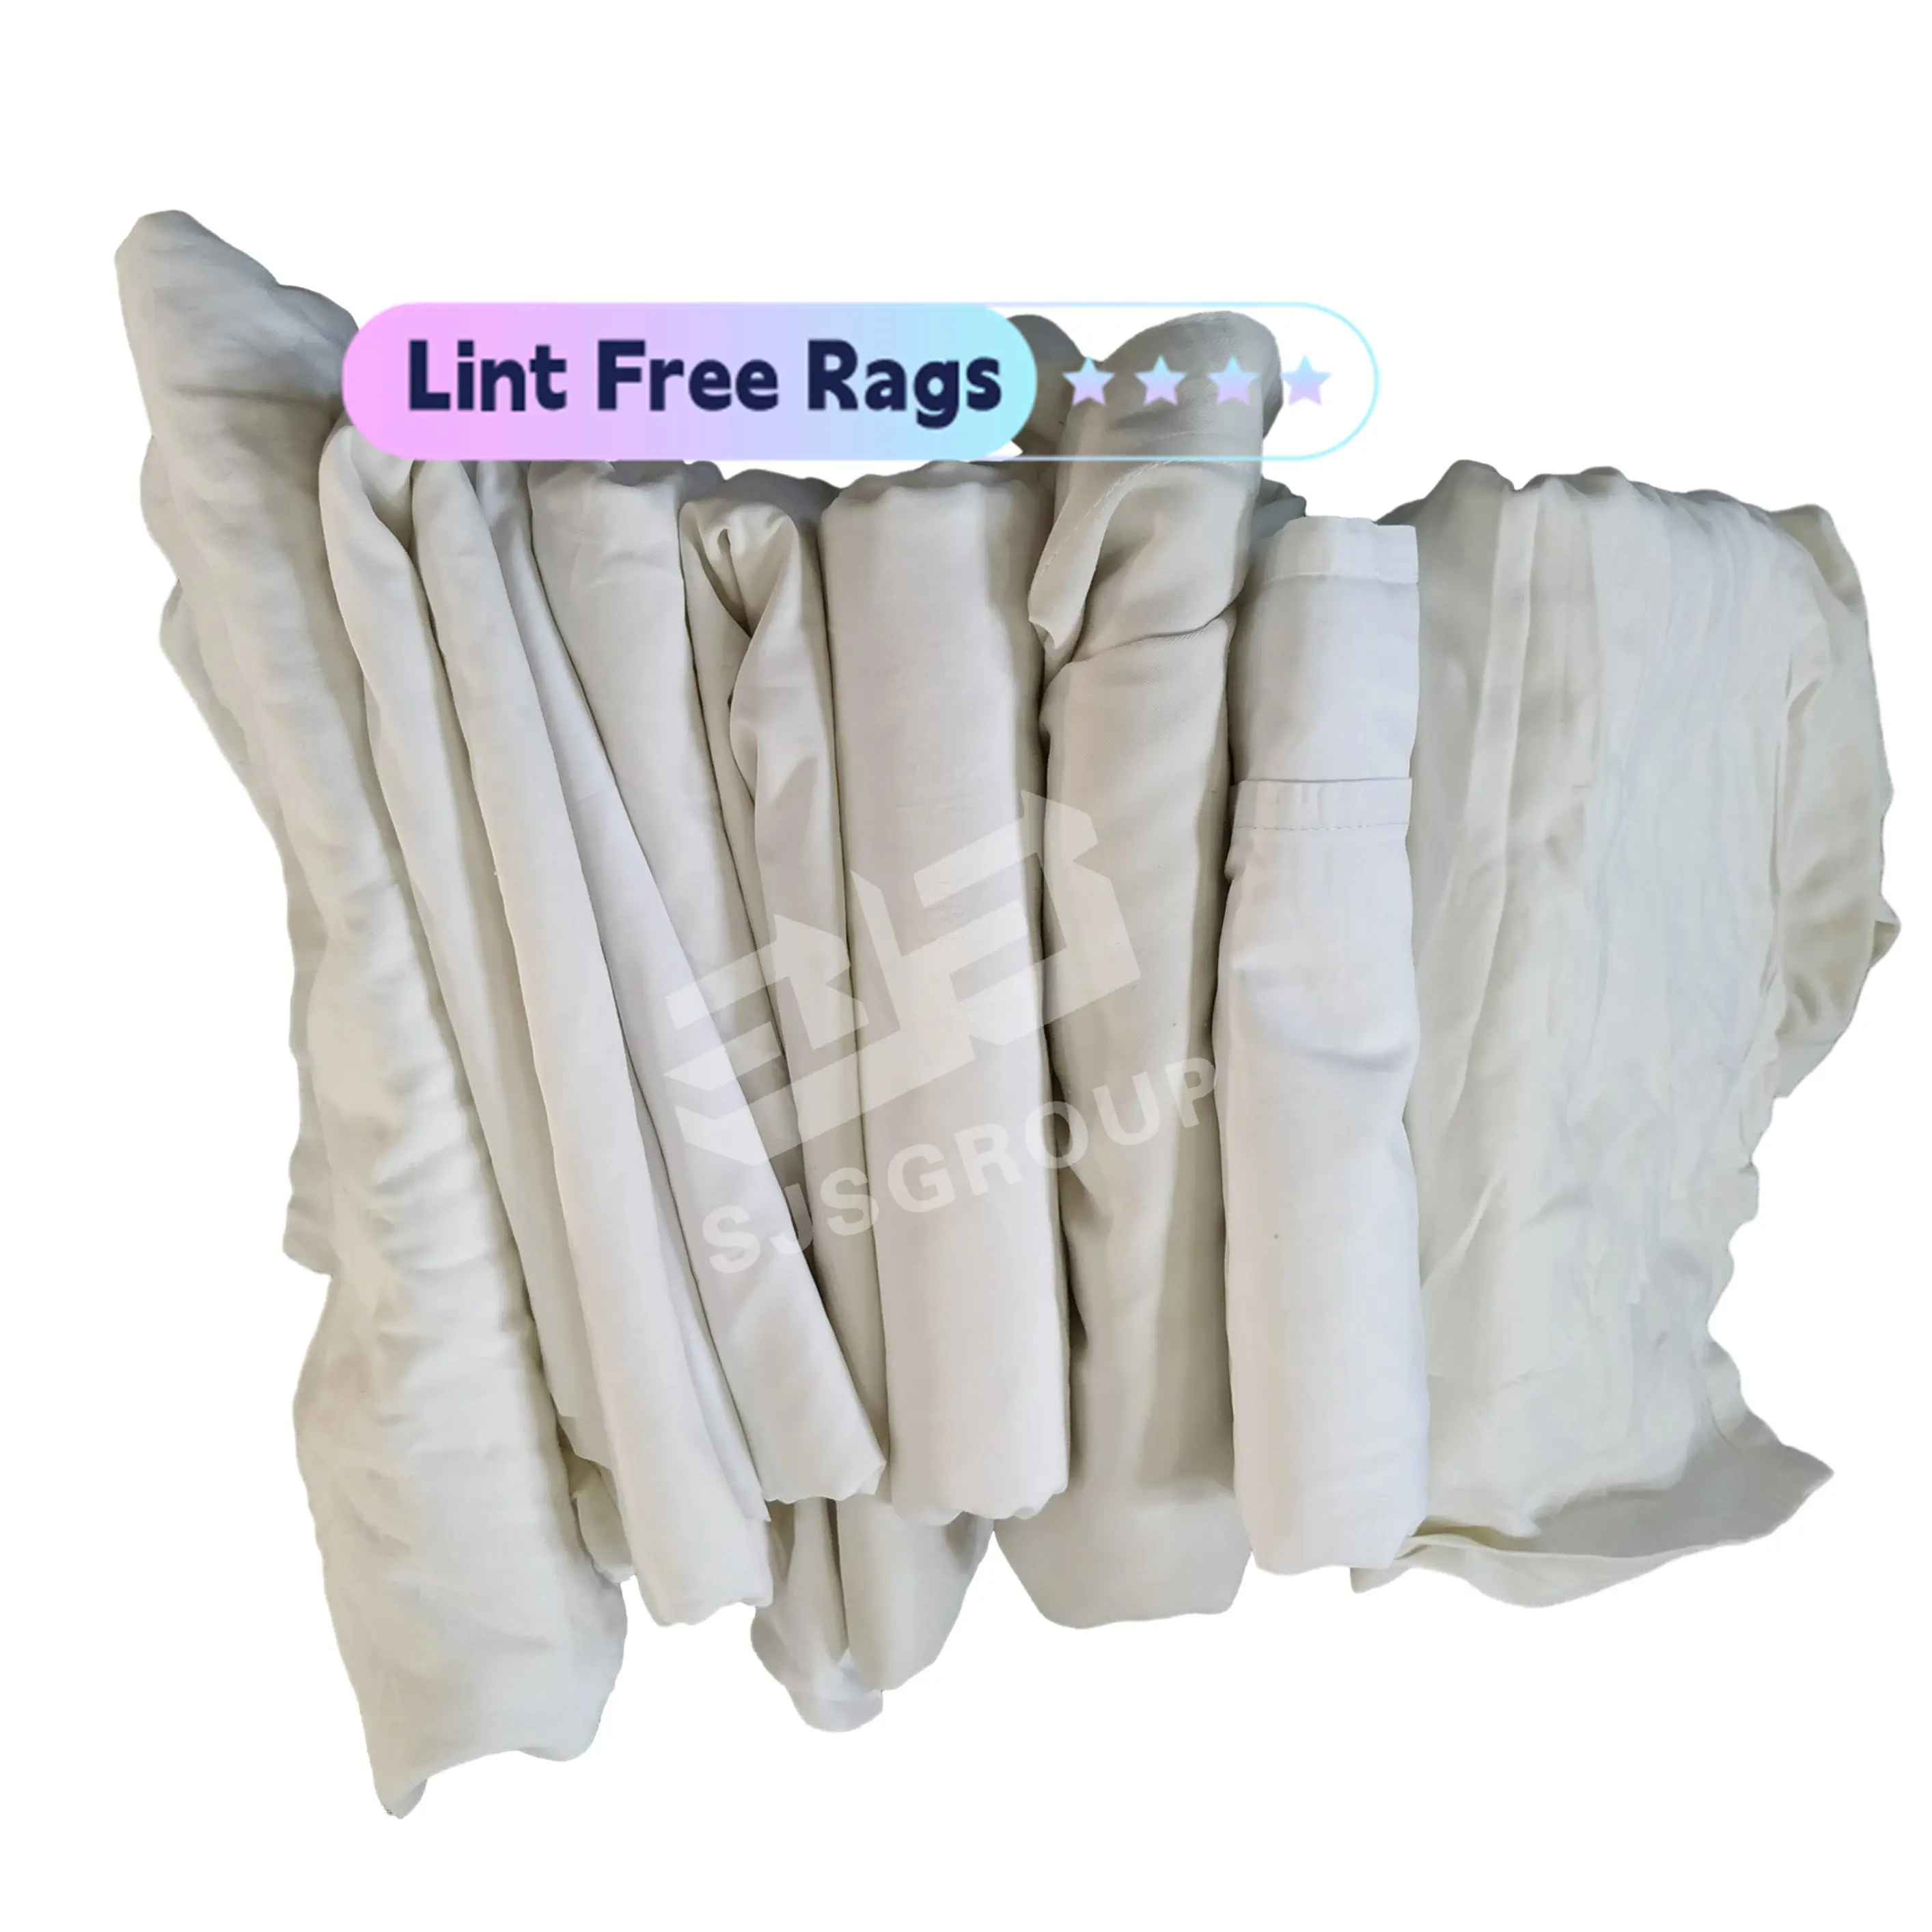 Trapos de láminas de corte de tamaño regular de alta absorción, pintura blanca de 10kg, bolsa de 8 libras de trapos de algodón blanco, 25 libras